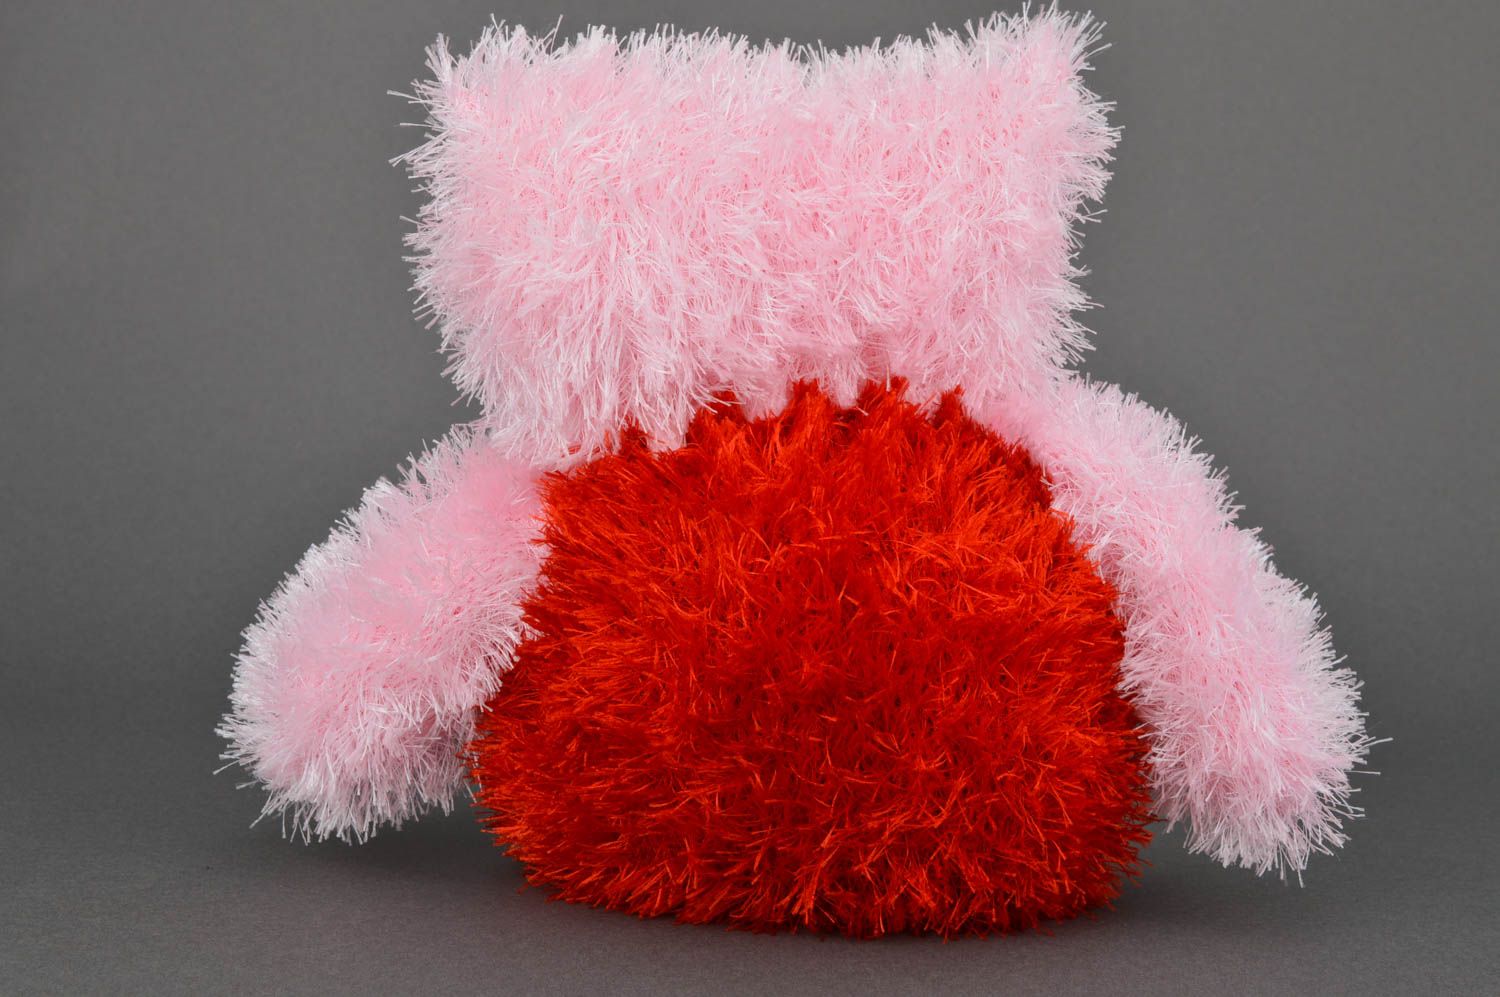 Handmade soft toy decorative stuffed toy gift for baby nursery decor ideas photo 4